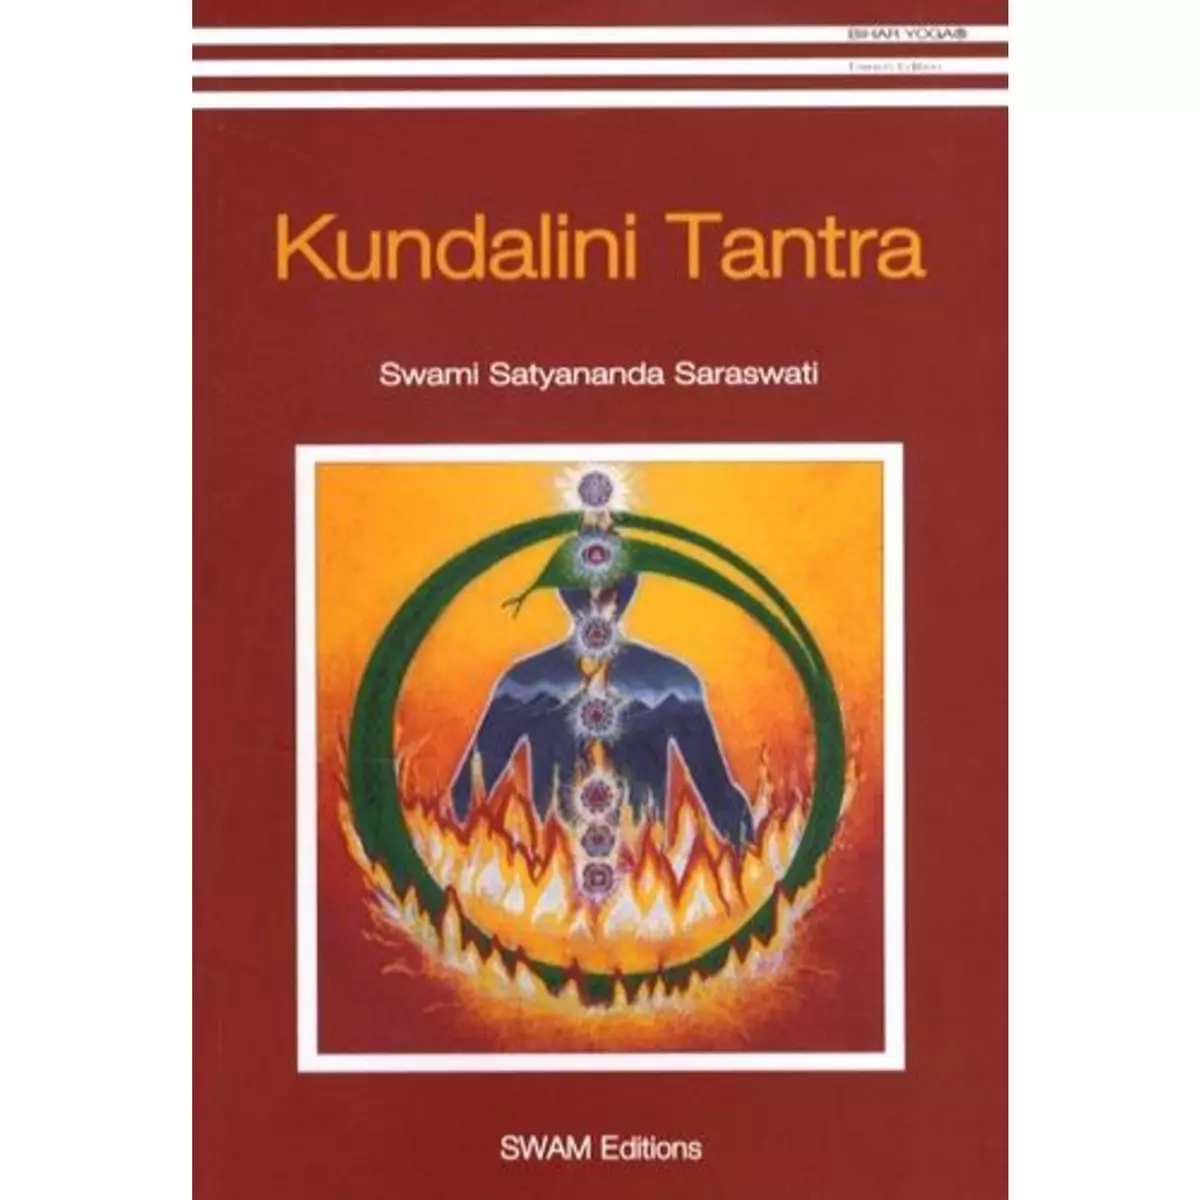  KUNDALINI TANTRA, Saraswati Satyananda